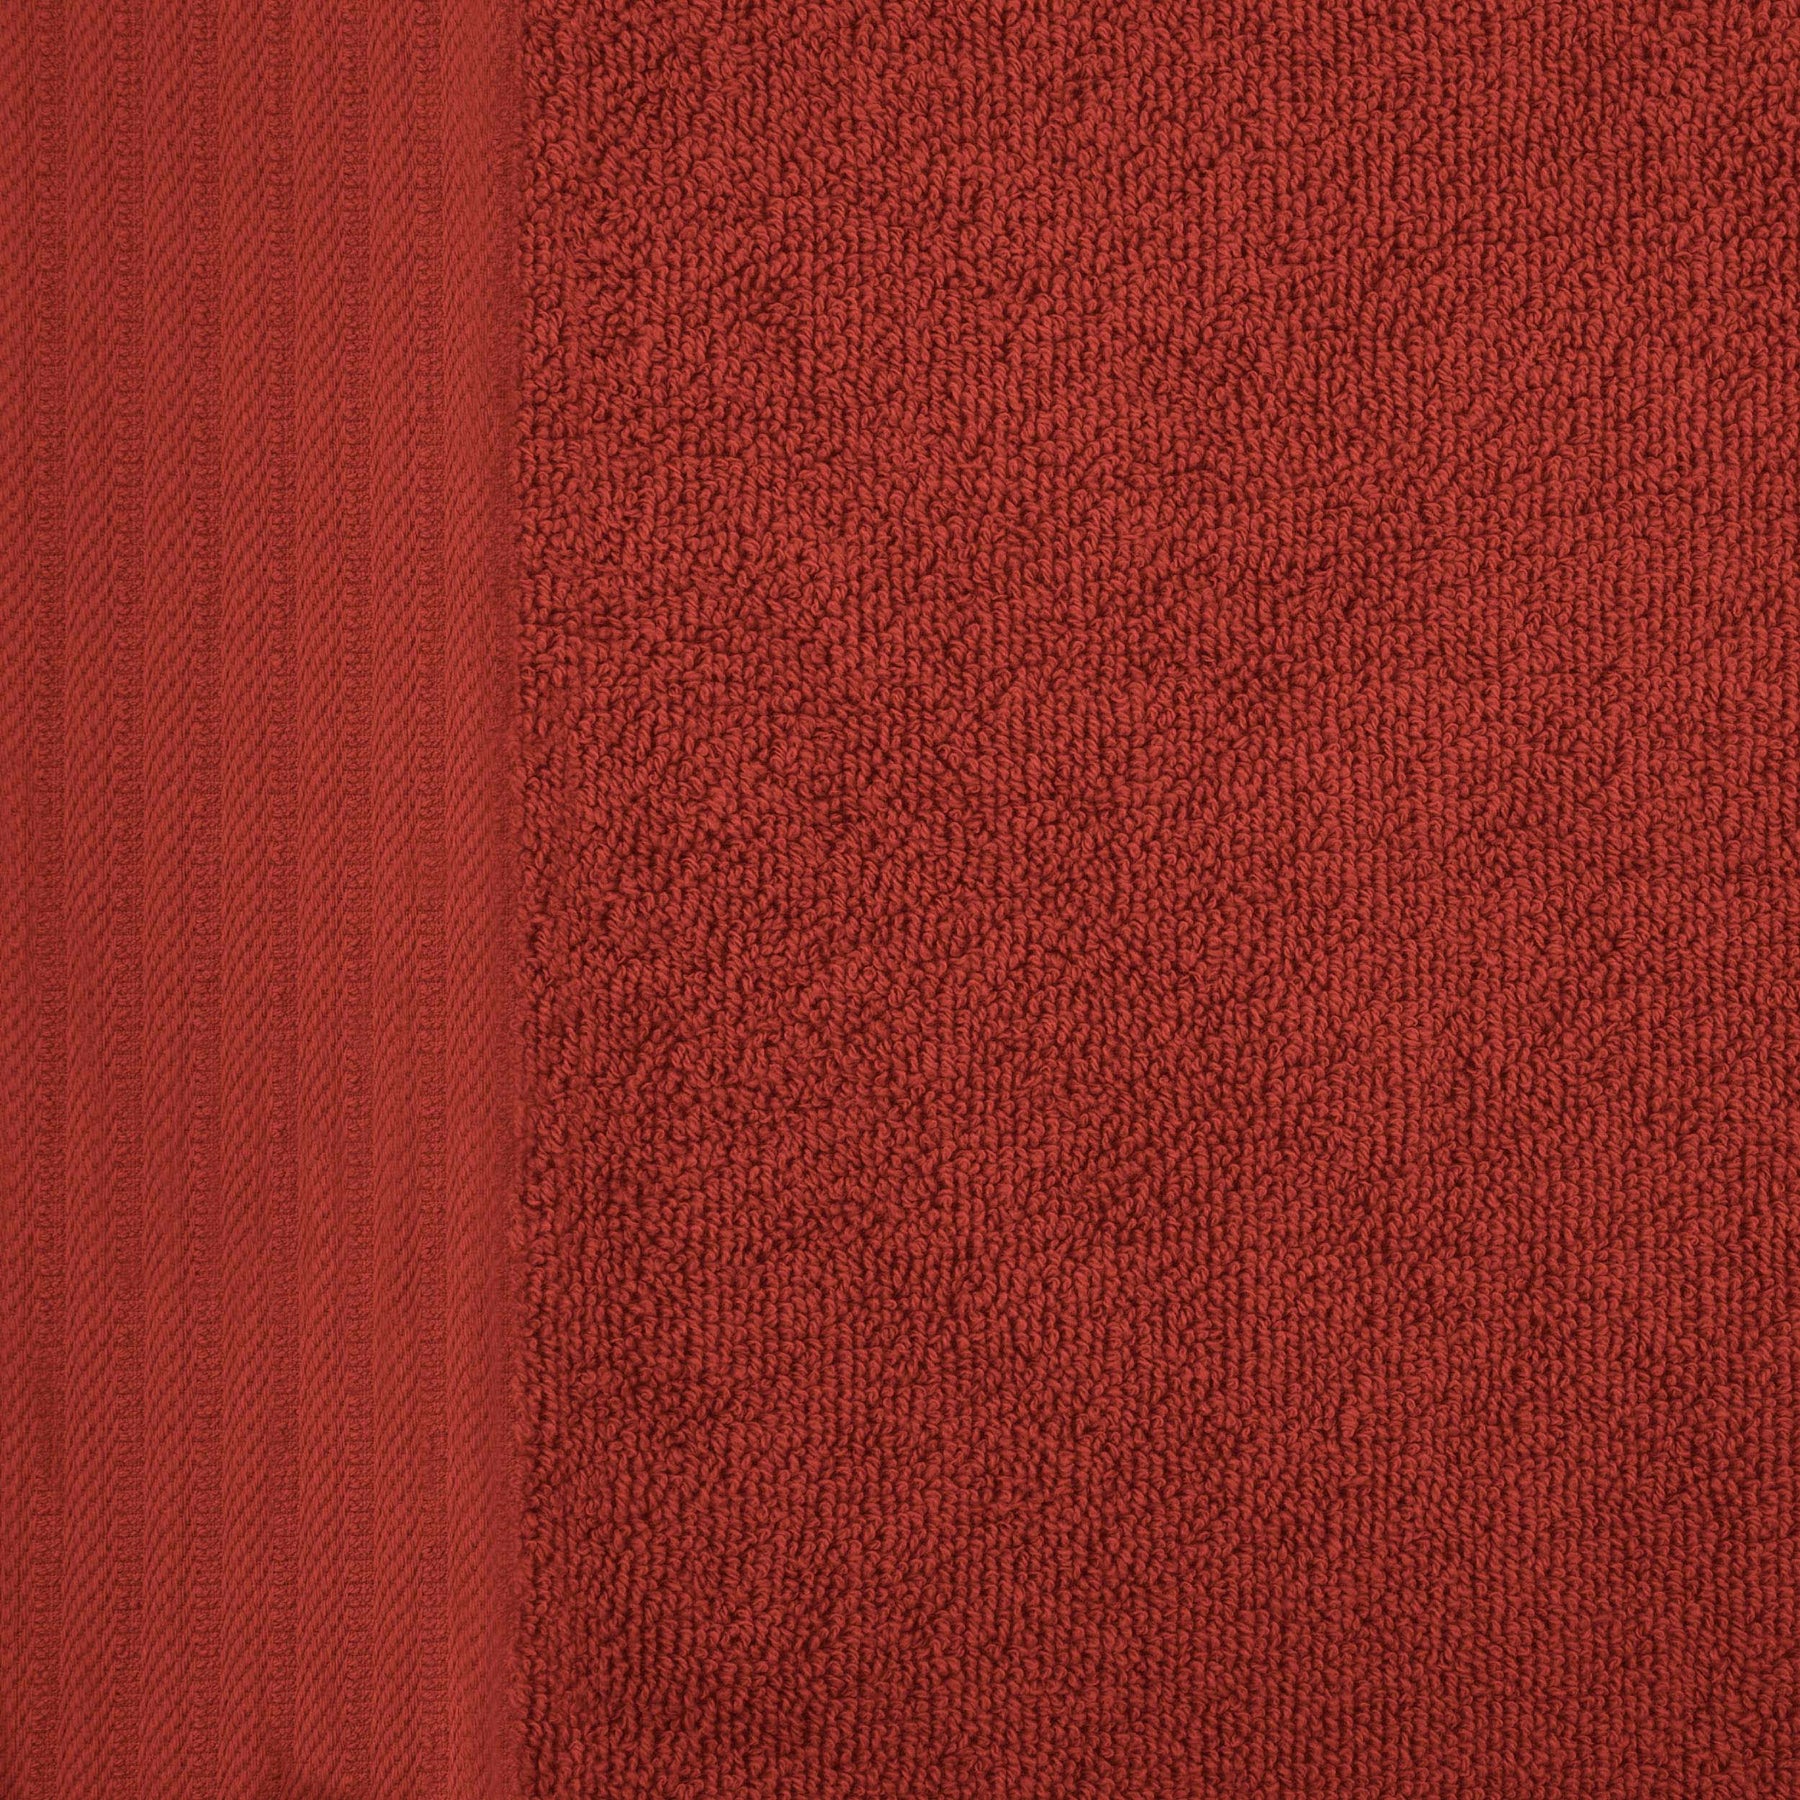 Premium Turkish Cotton Jacquard Herringbone and Solid 12-Piece Face Towel/ Washcloth Set -  Maroon